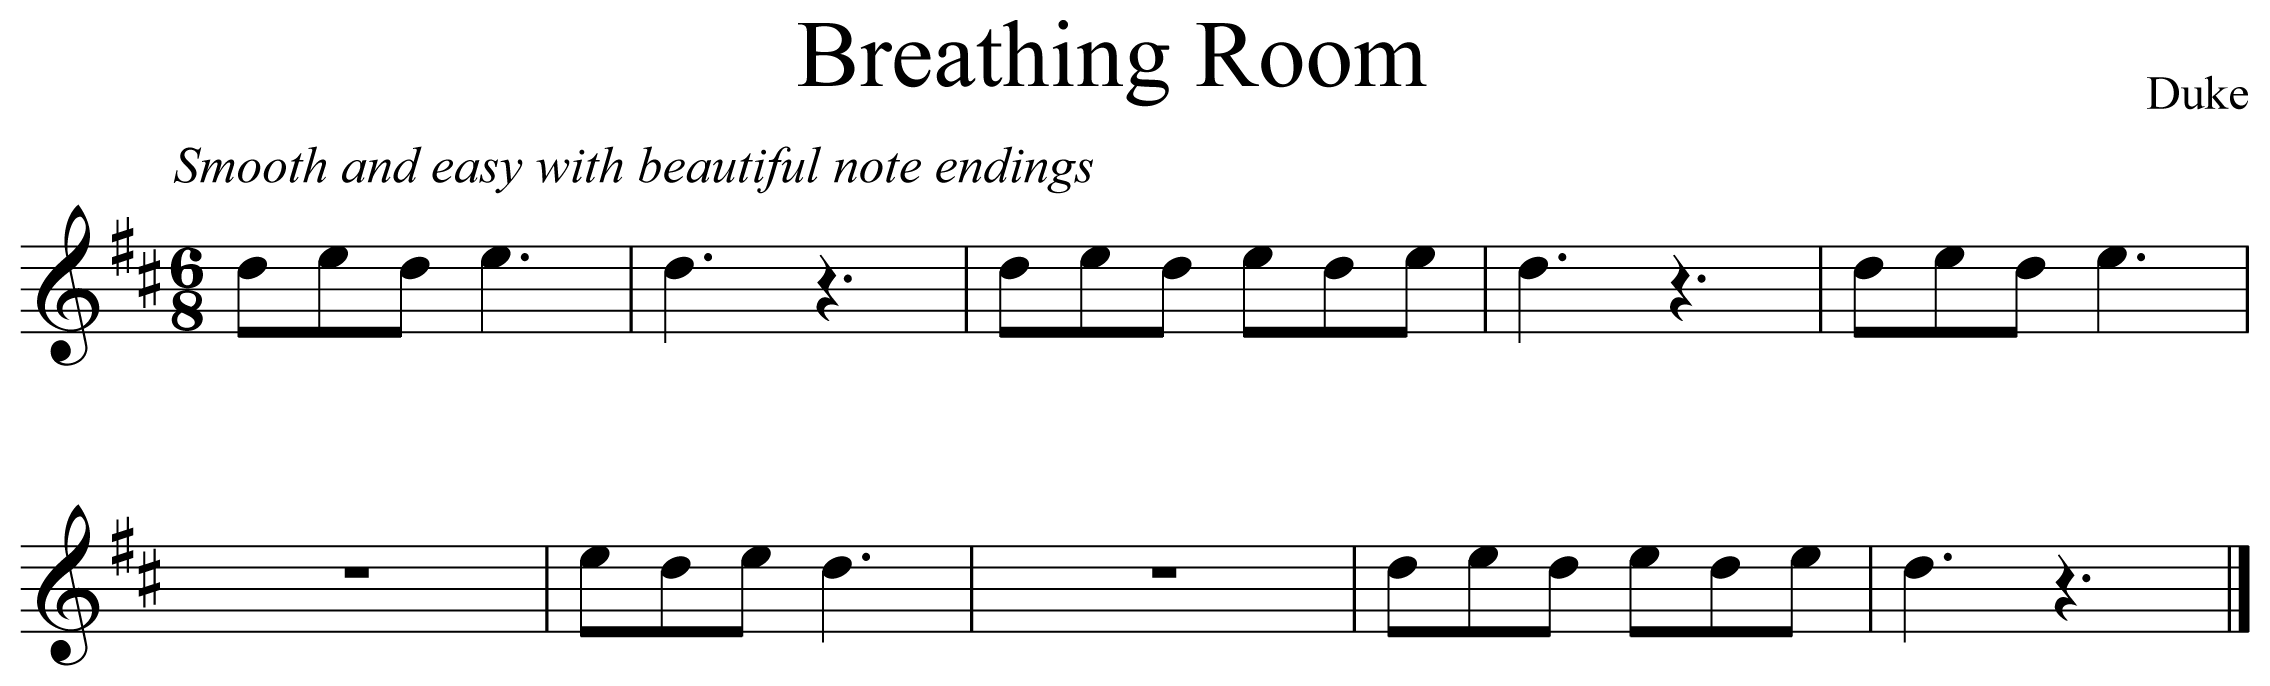 Breathing Room Music Notation Saxophone